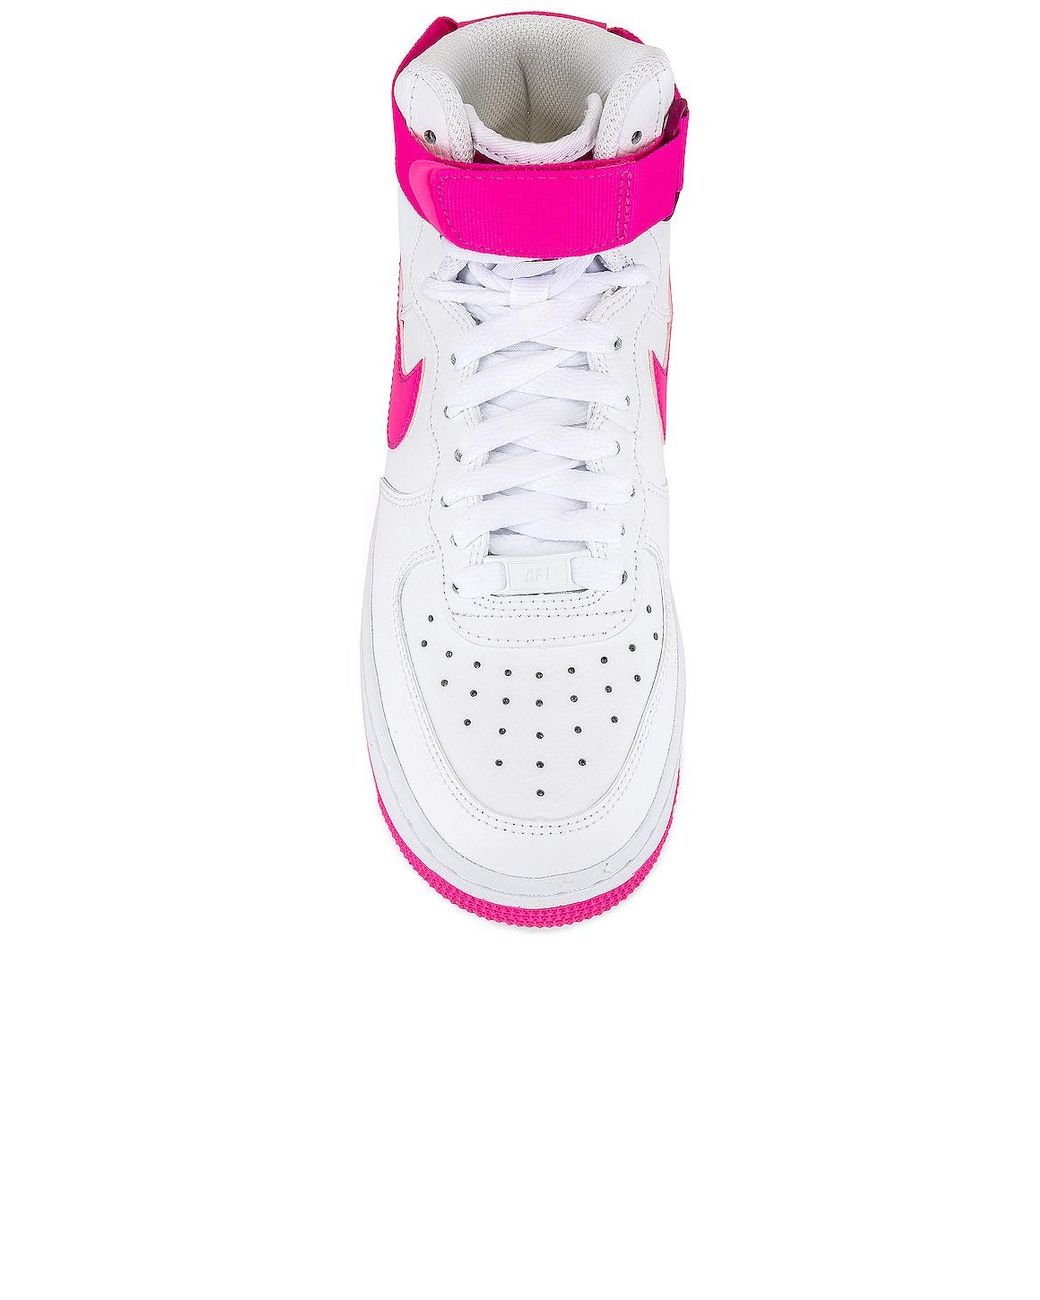 Nike Women's Air Force 1 Hi Sneaker in Pink | Lyst